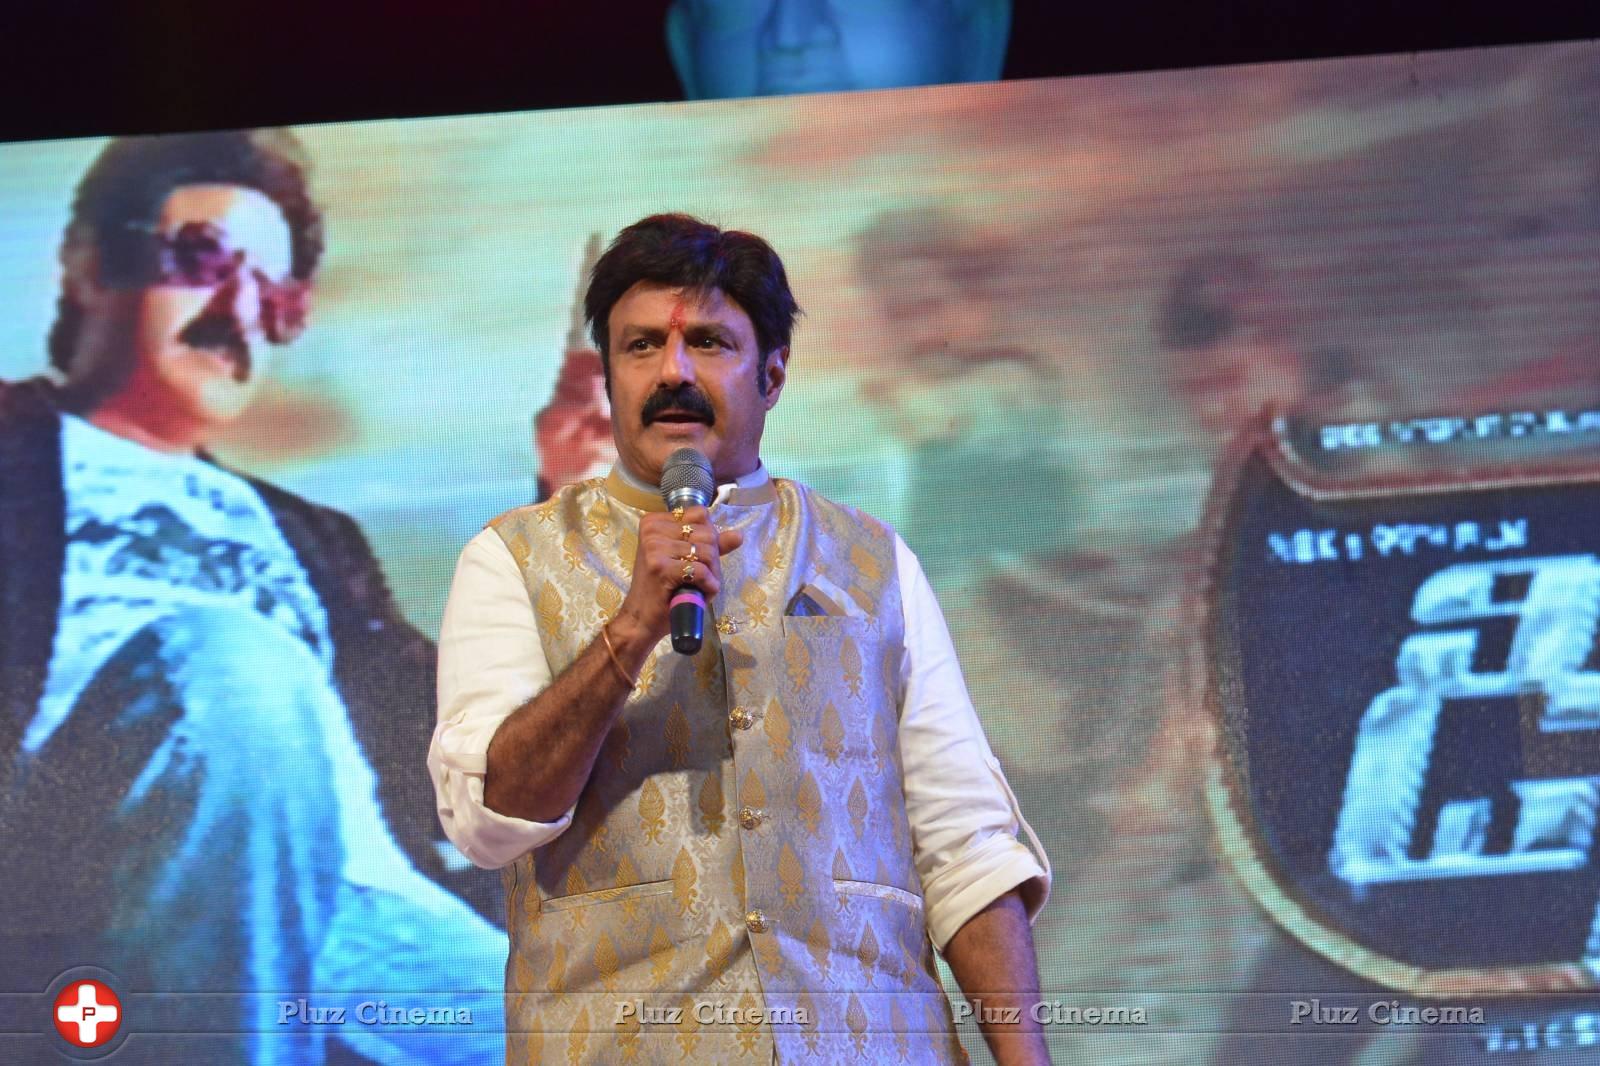 Nandamuri Balakrishna - Dictator Movie Audio Launch Photos | Picture 1183632